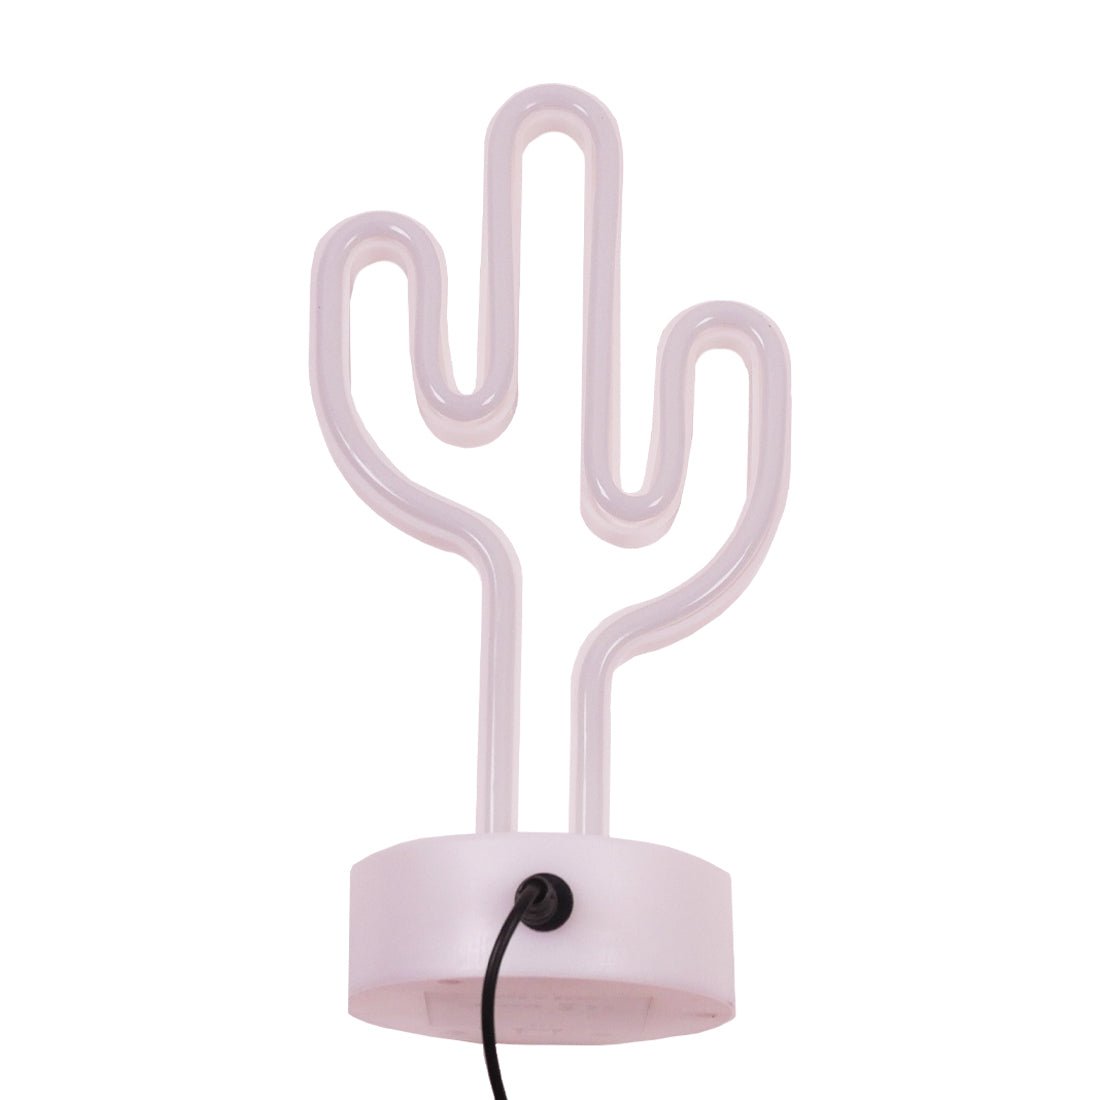 Led Neon Cactus Shape Lamp - Green - Store 974 | ستور ٩٧٤